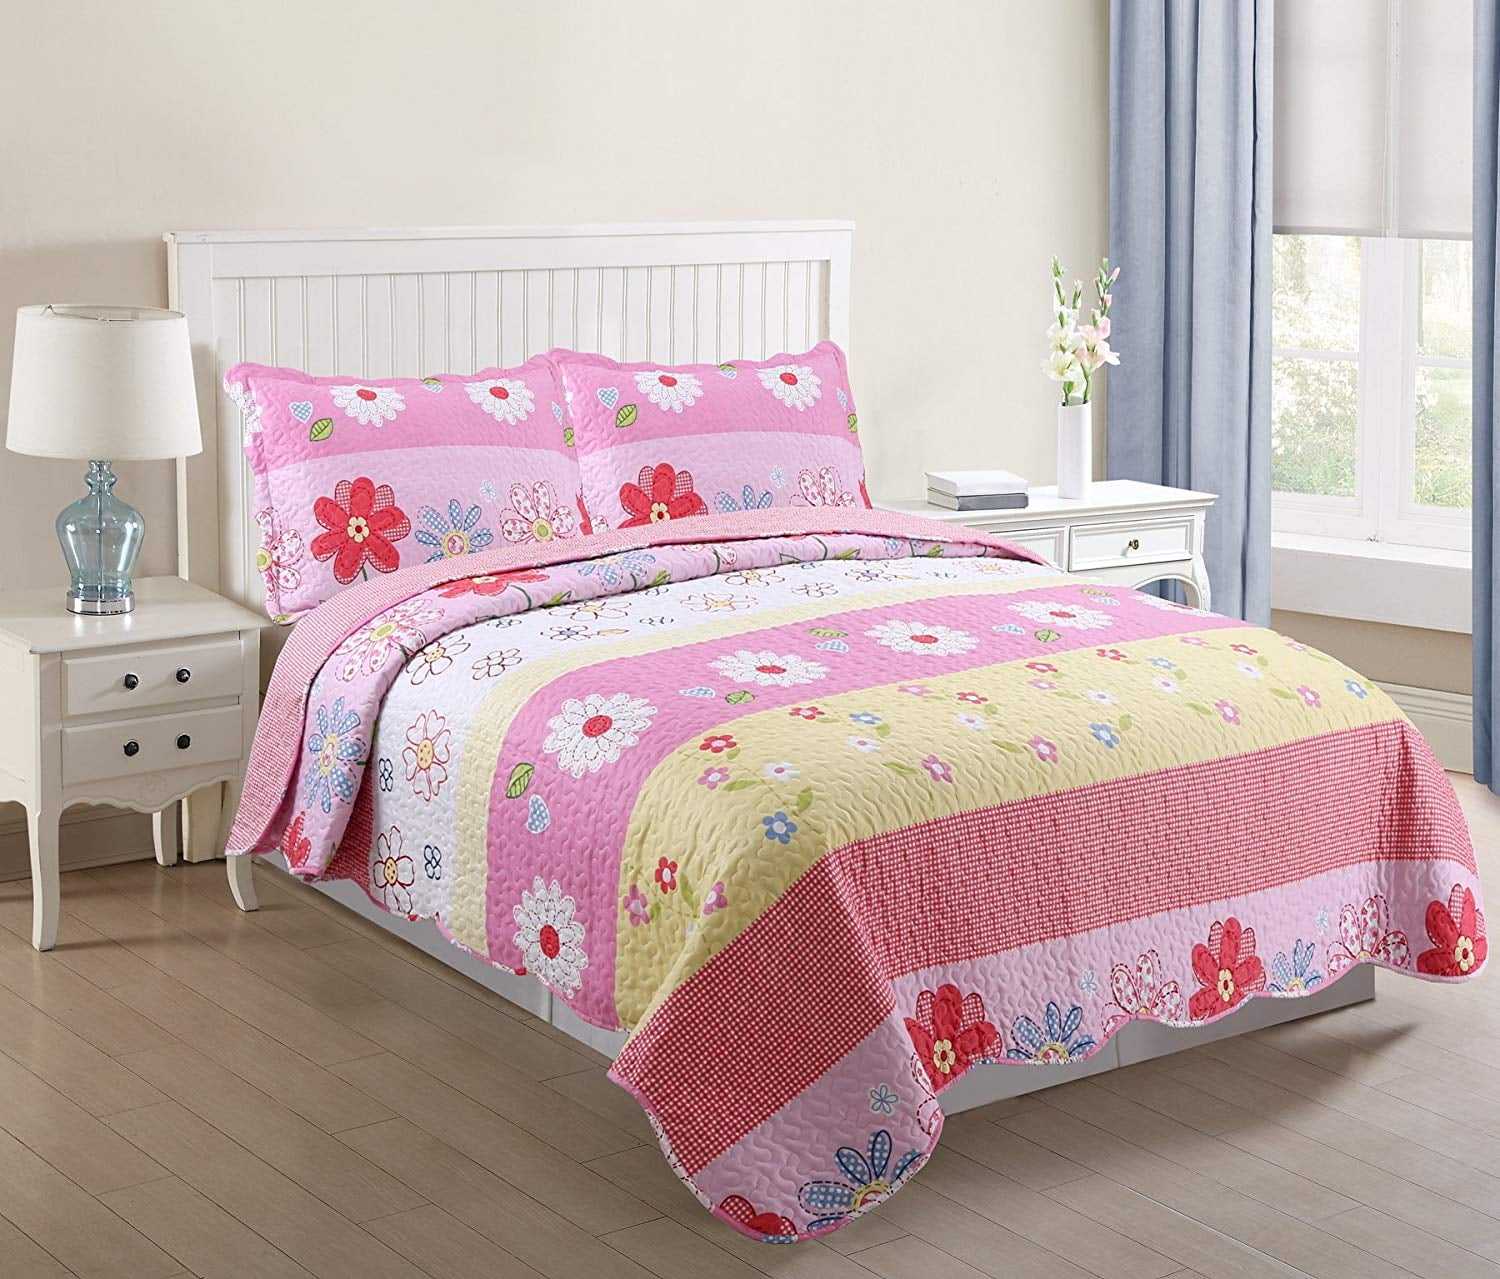 Marcielo 3 Piece Kids Bedspread Quilts Set Throw Blanket For Teens